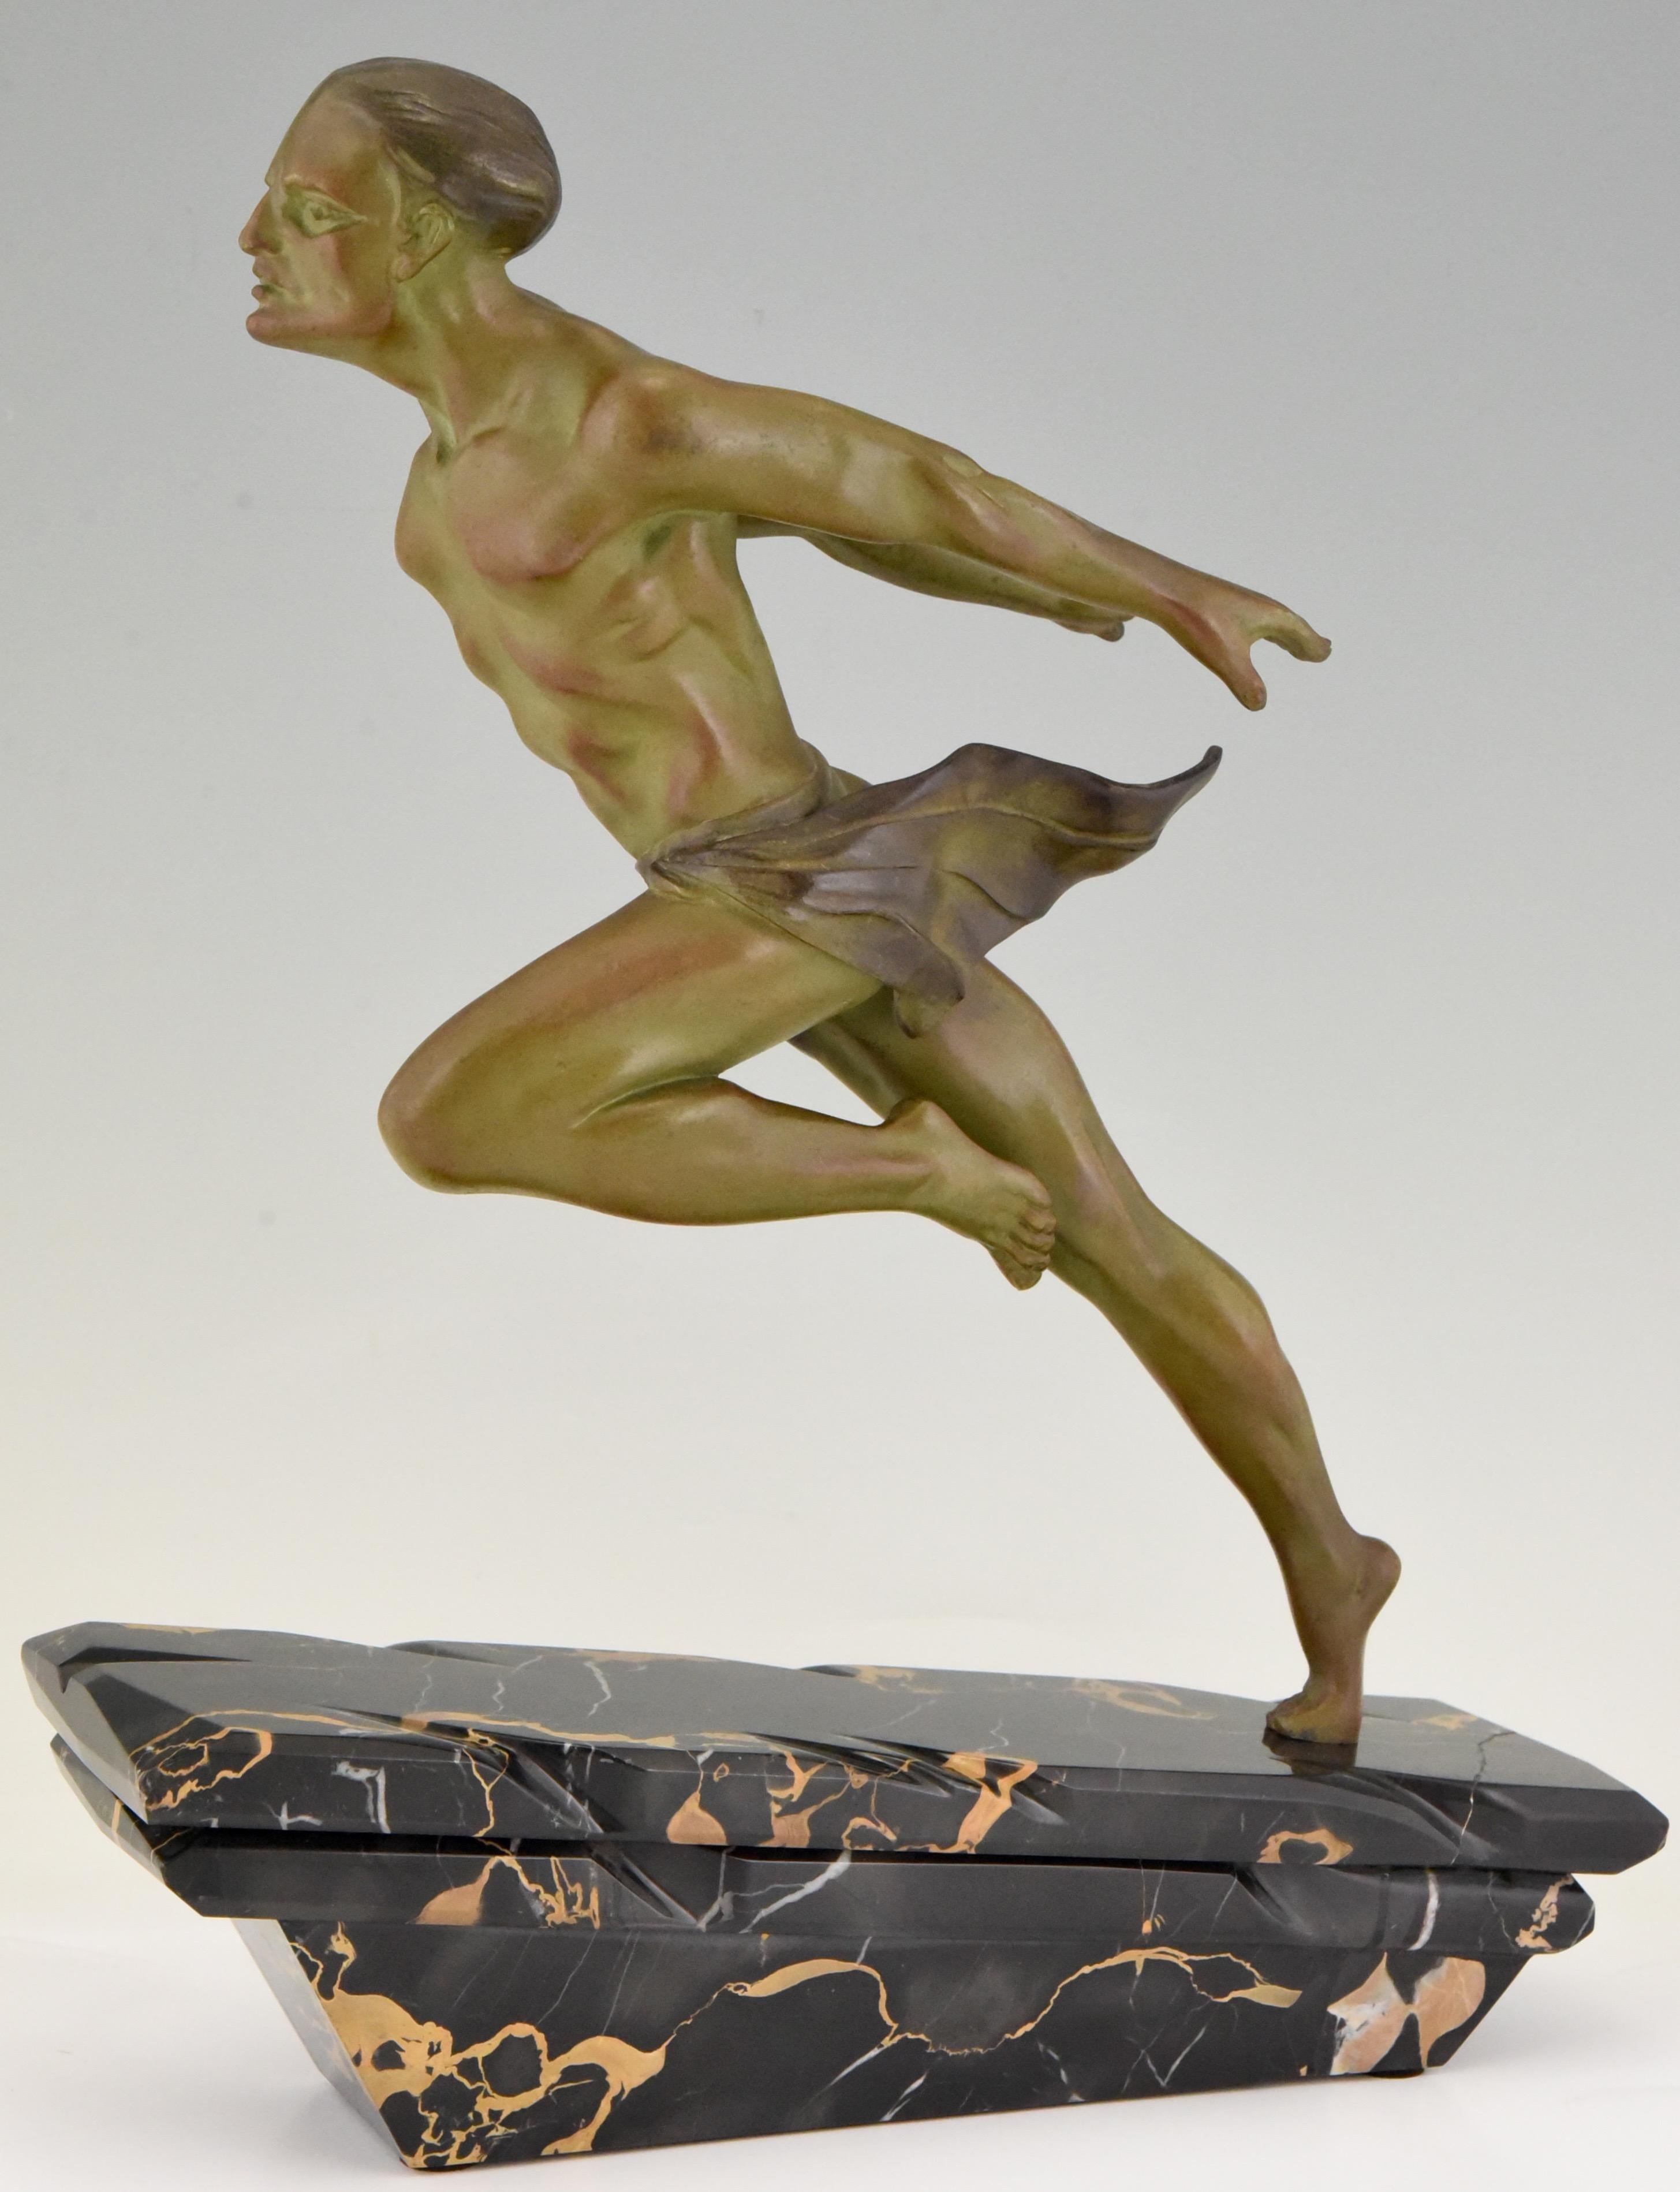 French Art Deco Sculpture Running Man or Athlète L. Valderi, France, 1930